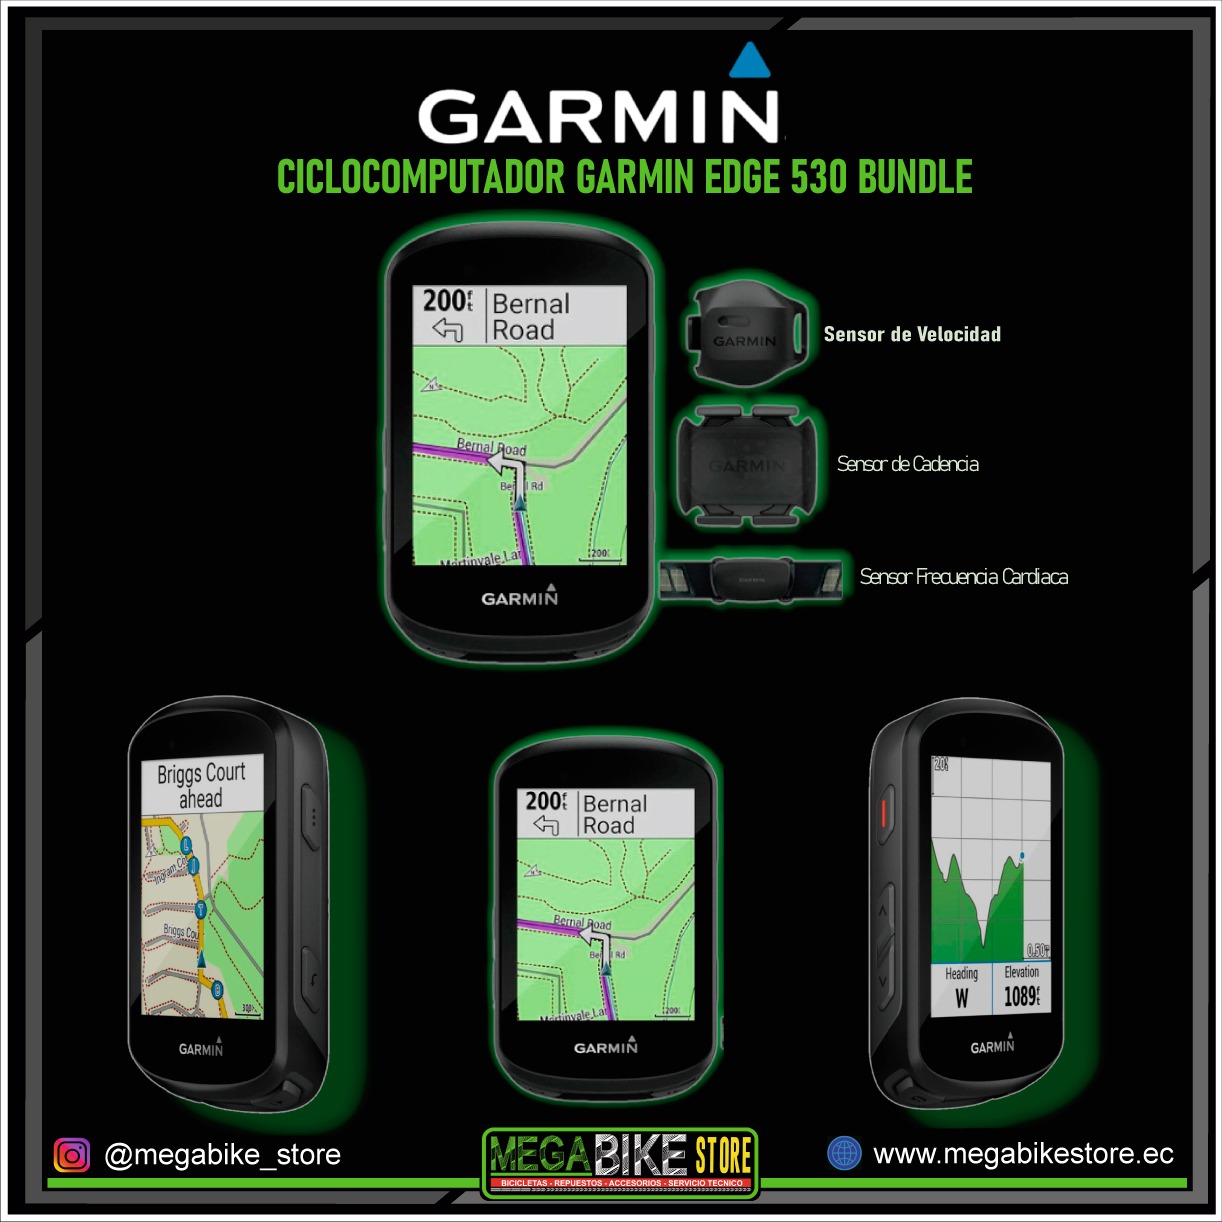 Soporte Garmin Gps Ciclocomputador Celular Bicicleta